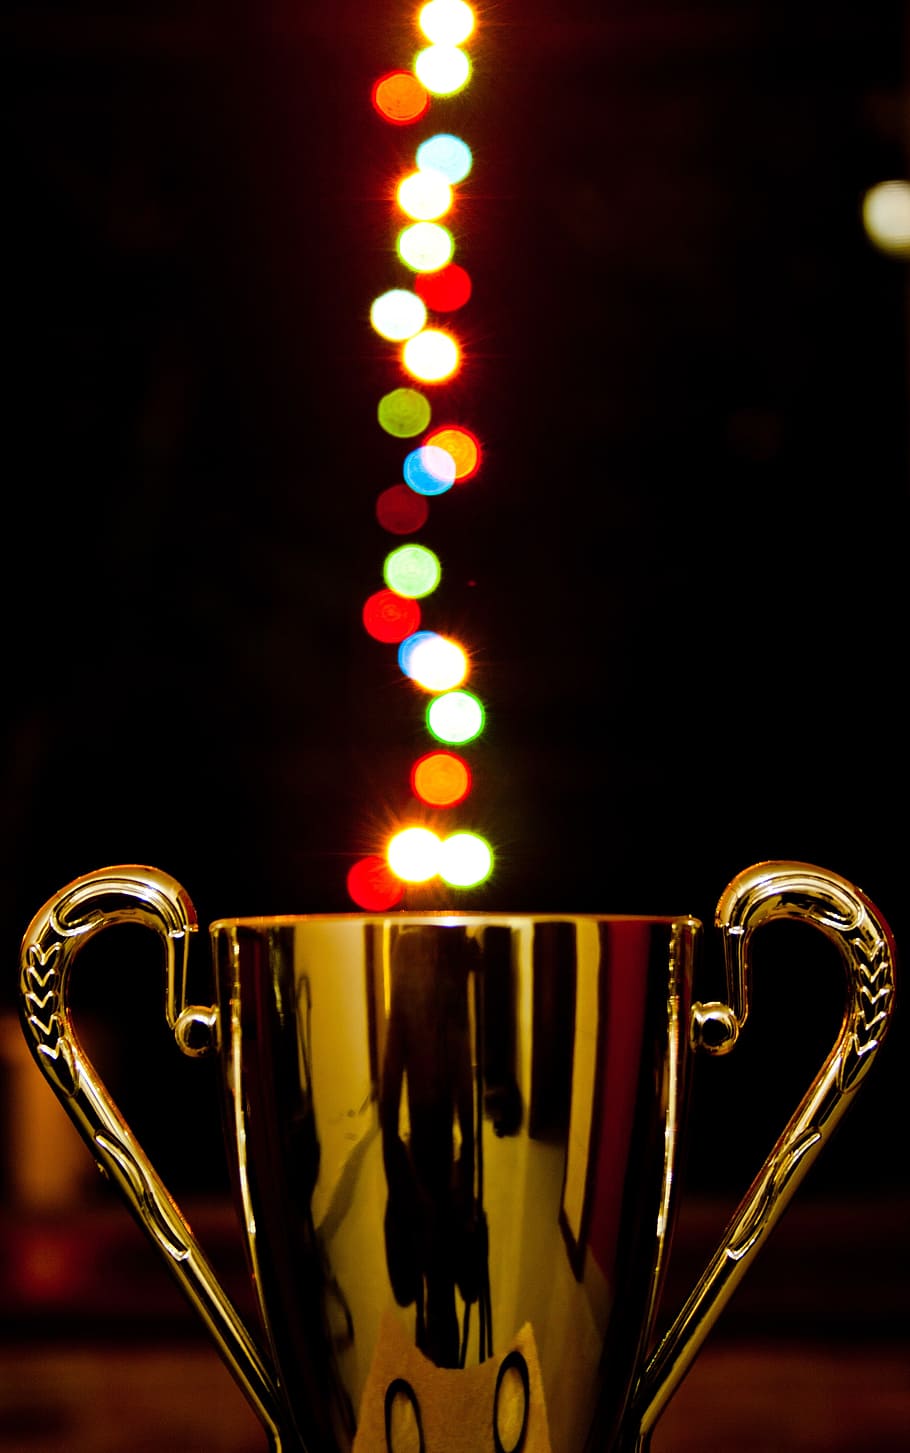 gold trophy figure, bokeh effect, award, cup, lights, bokeh, trophy, prize, achievement, victory